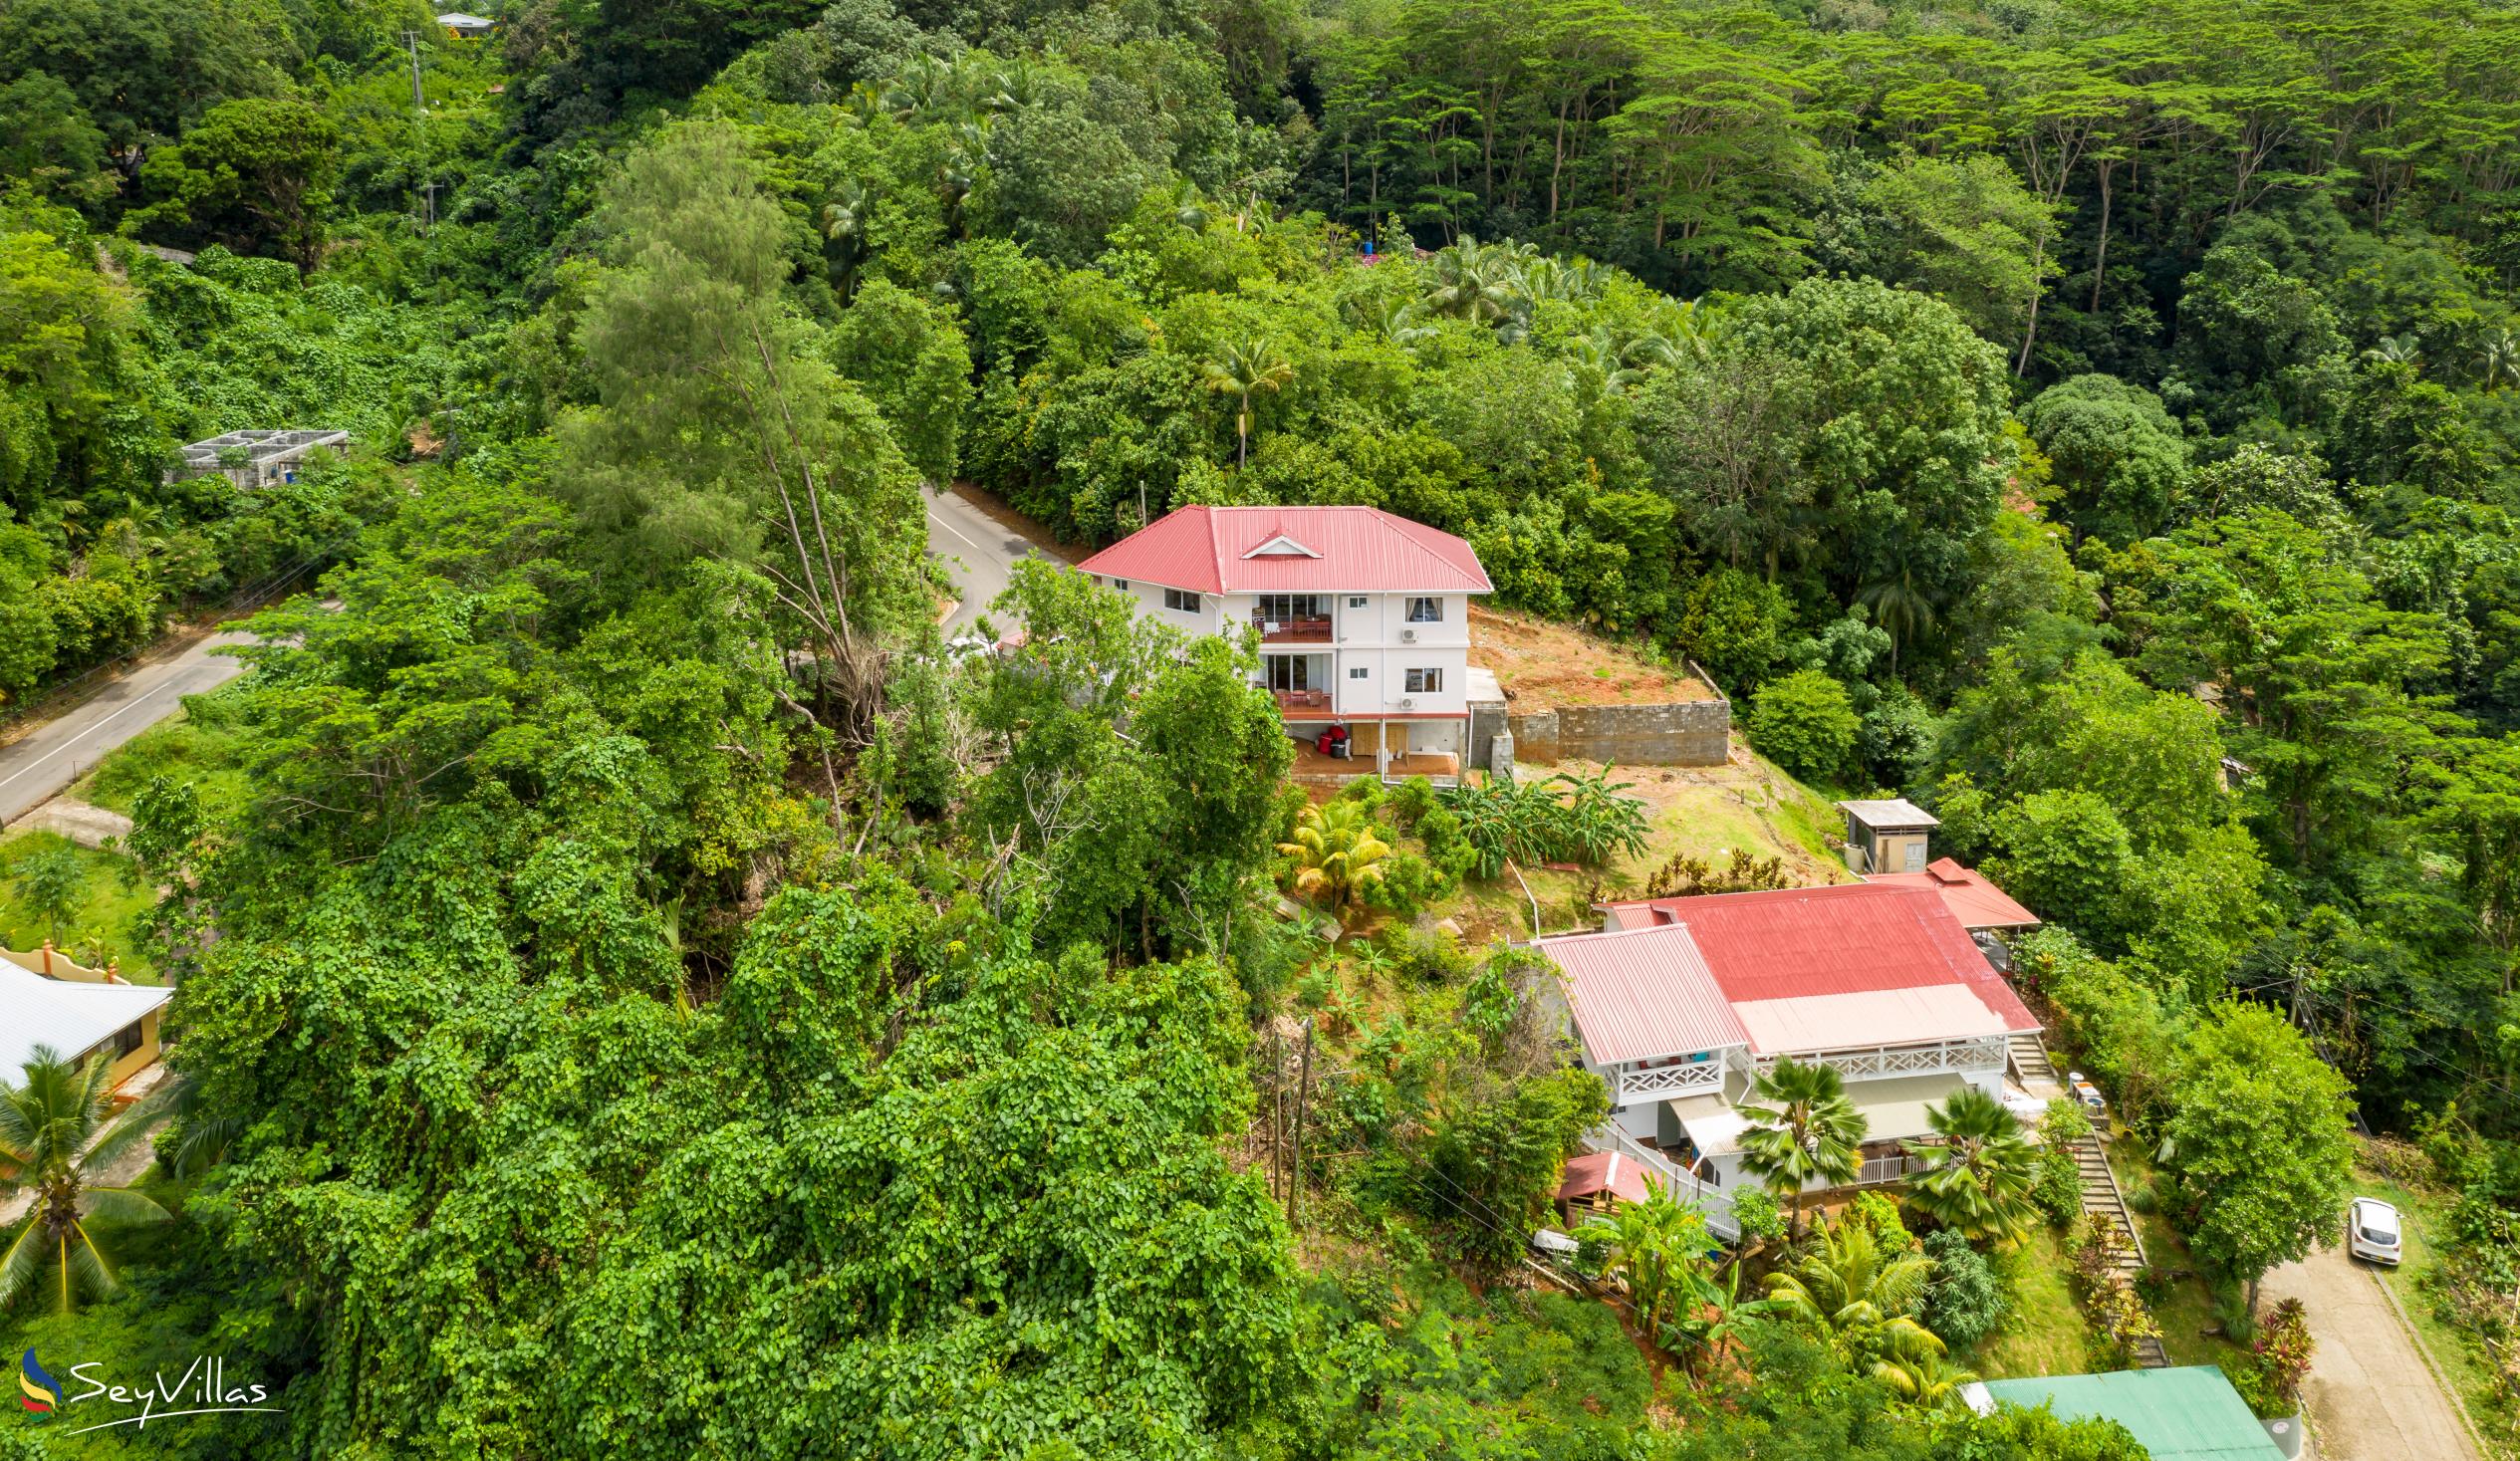 Foto 12: Cella Villa - Location - Mahé (Seychelles)